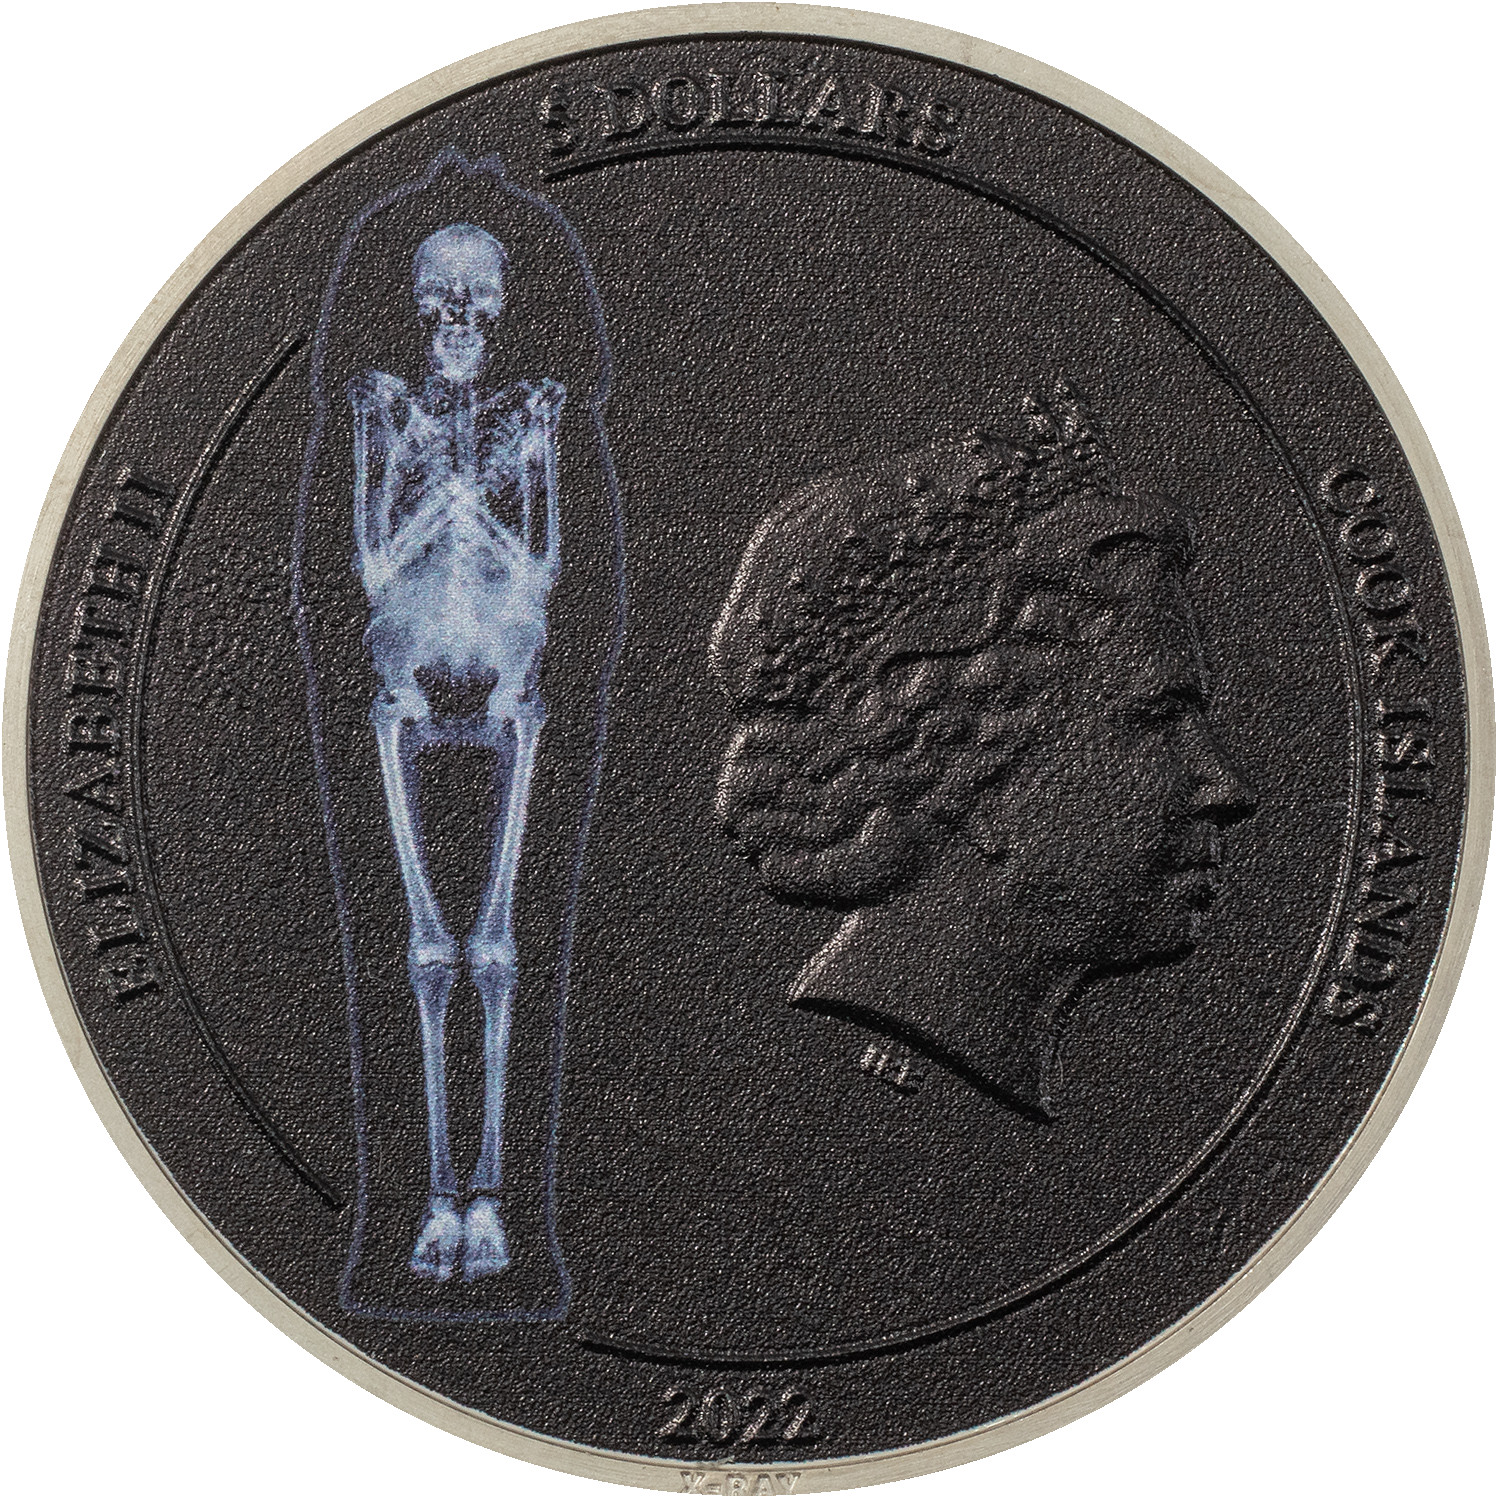 Cook Islands. 5 Dollars 2022. X-Ray 2022 – Mummy. 1 Oz Silver